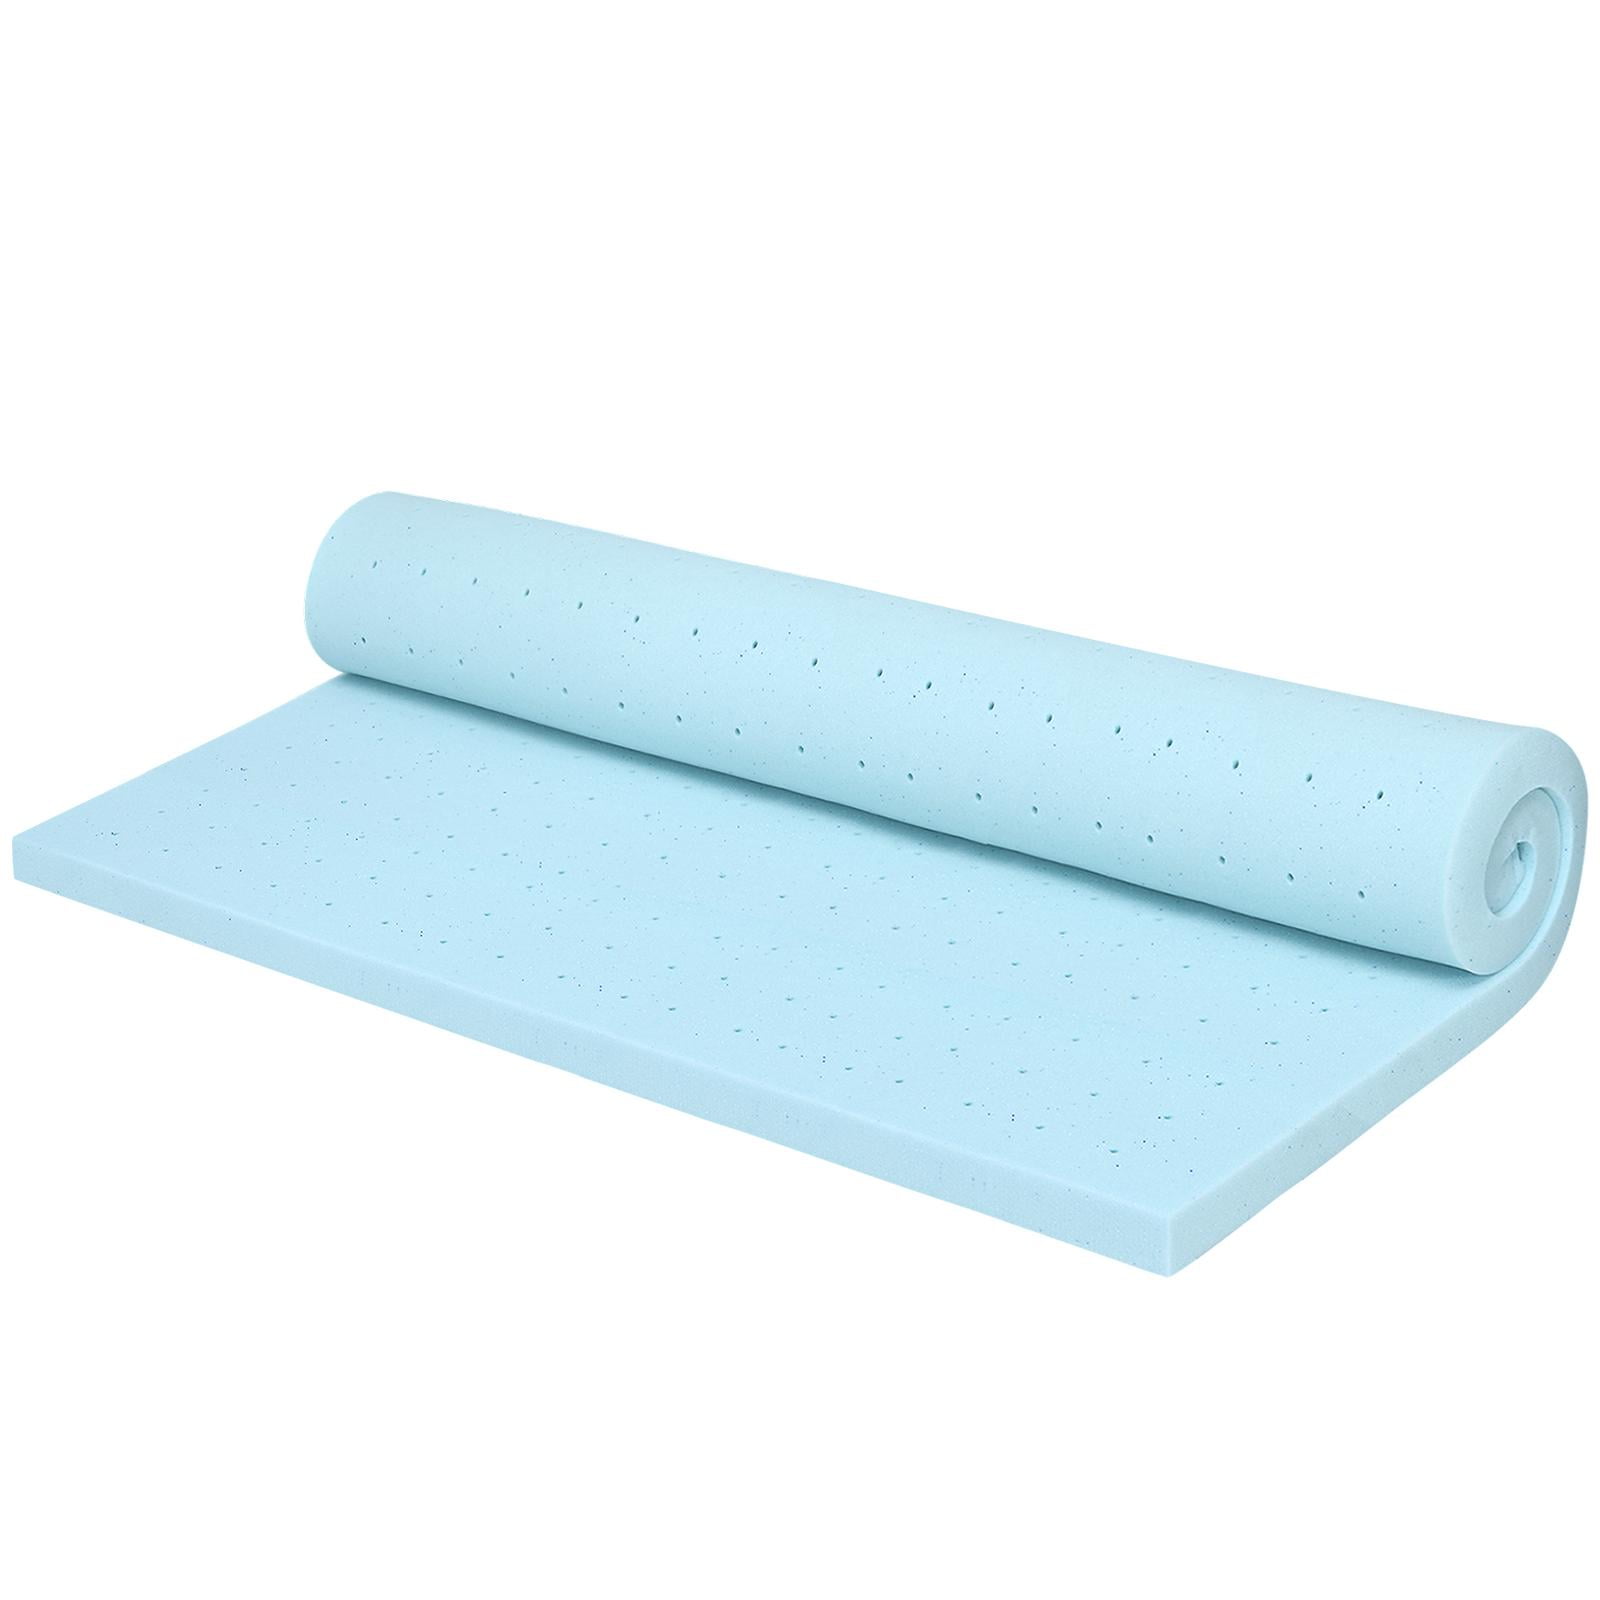 Blue Memory Foam Padding, Self Adhesive, 24'' x 16'' x 3/8'', Set of 2